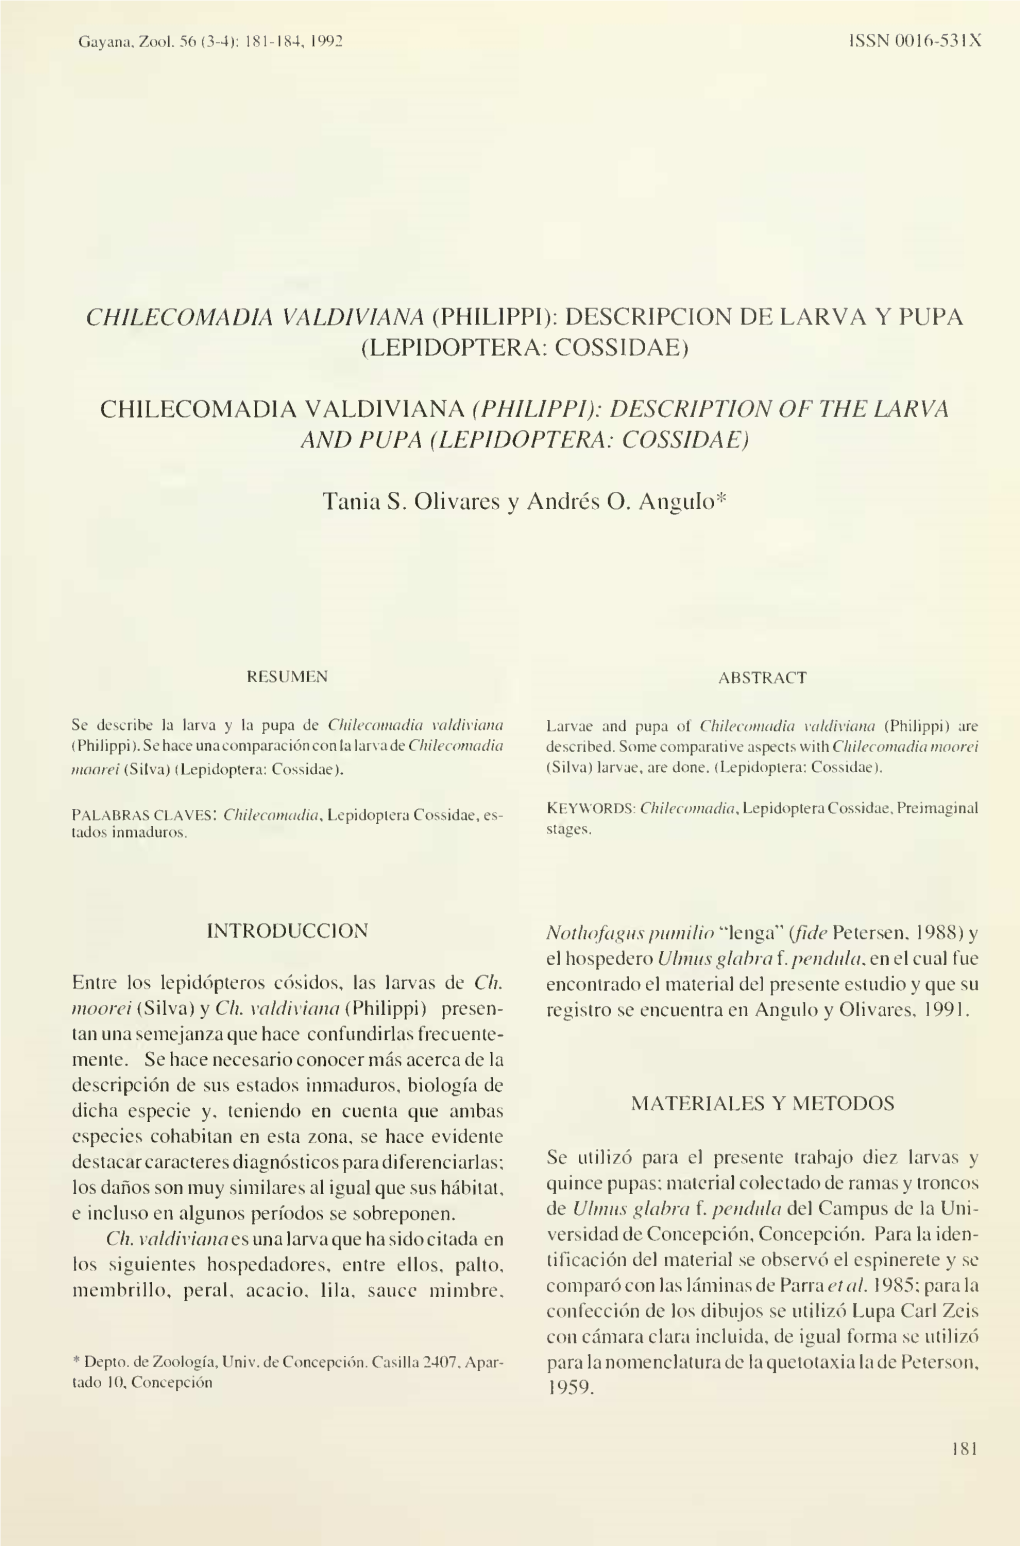 Chilecomadia Valdiviana (Philippi): Description of the Larva and Pupa (Lepidoptera: Cossidae)